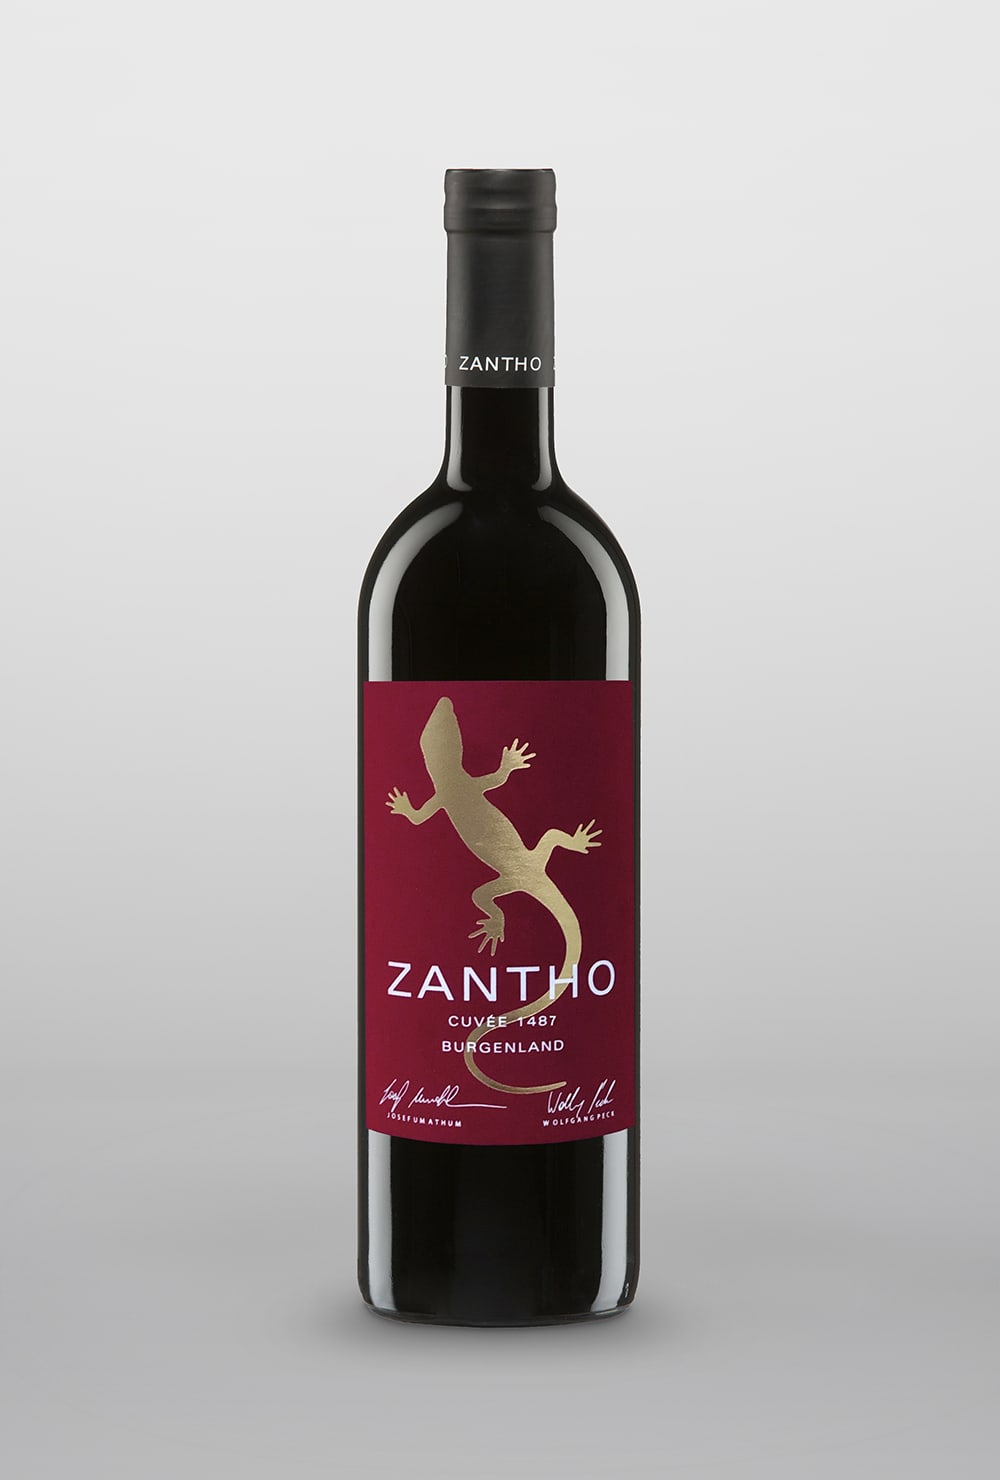 FINAT Award 2020 -Zantho